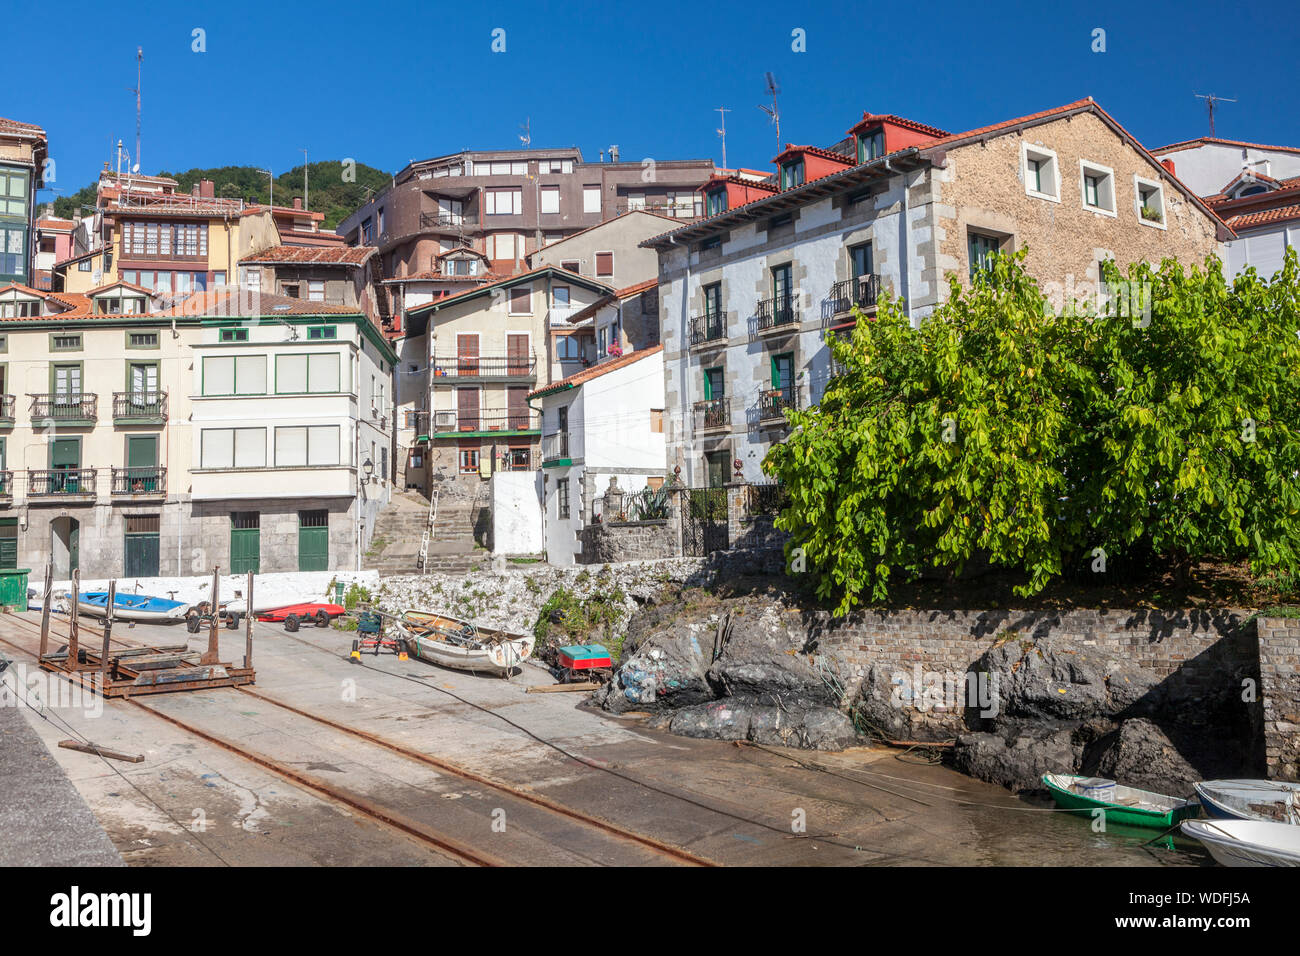 Mundaka village, Vizcaya province, The Basque Country, Spain Stock Photo